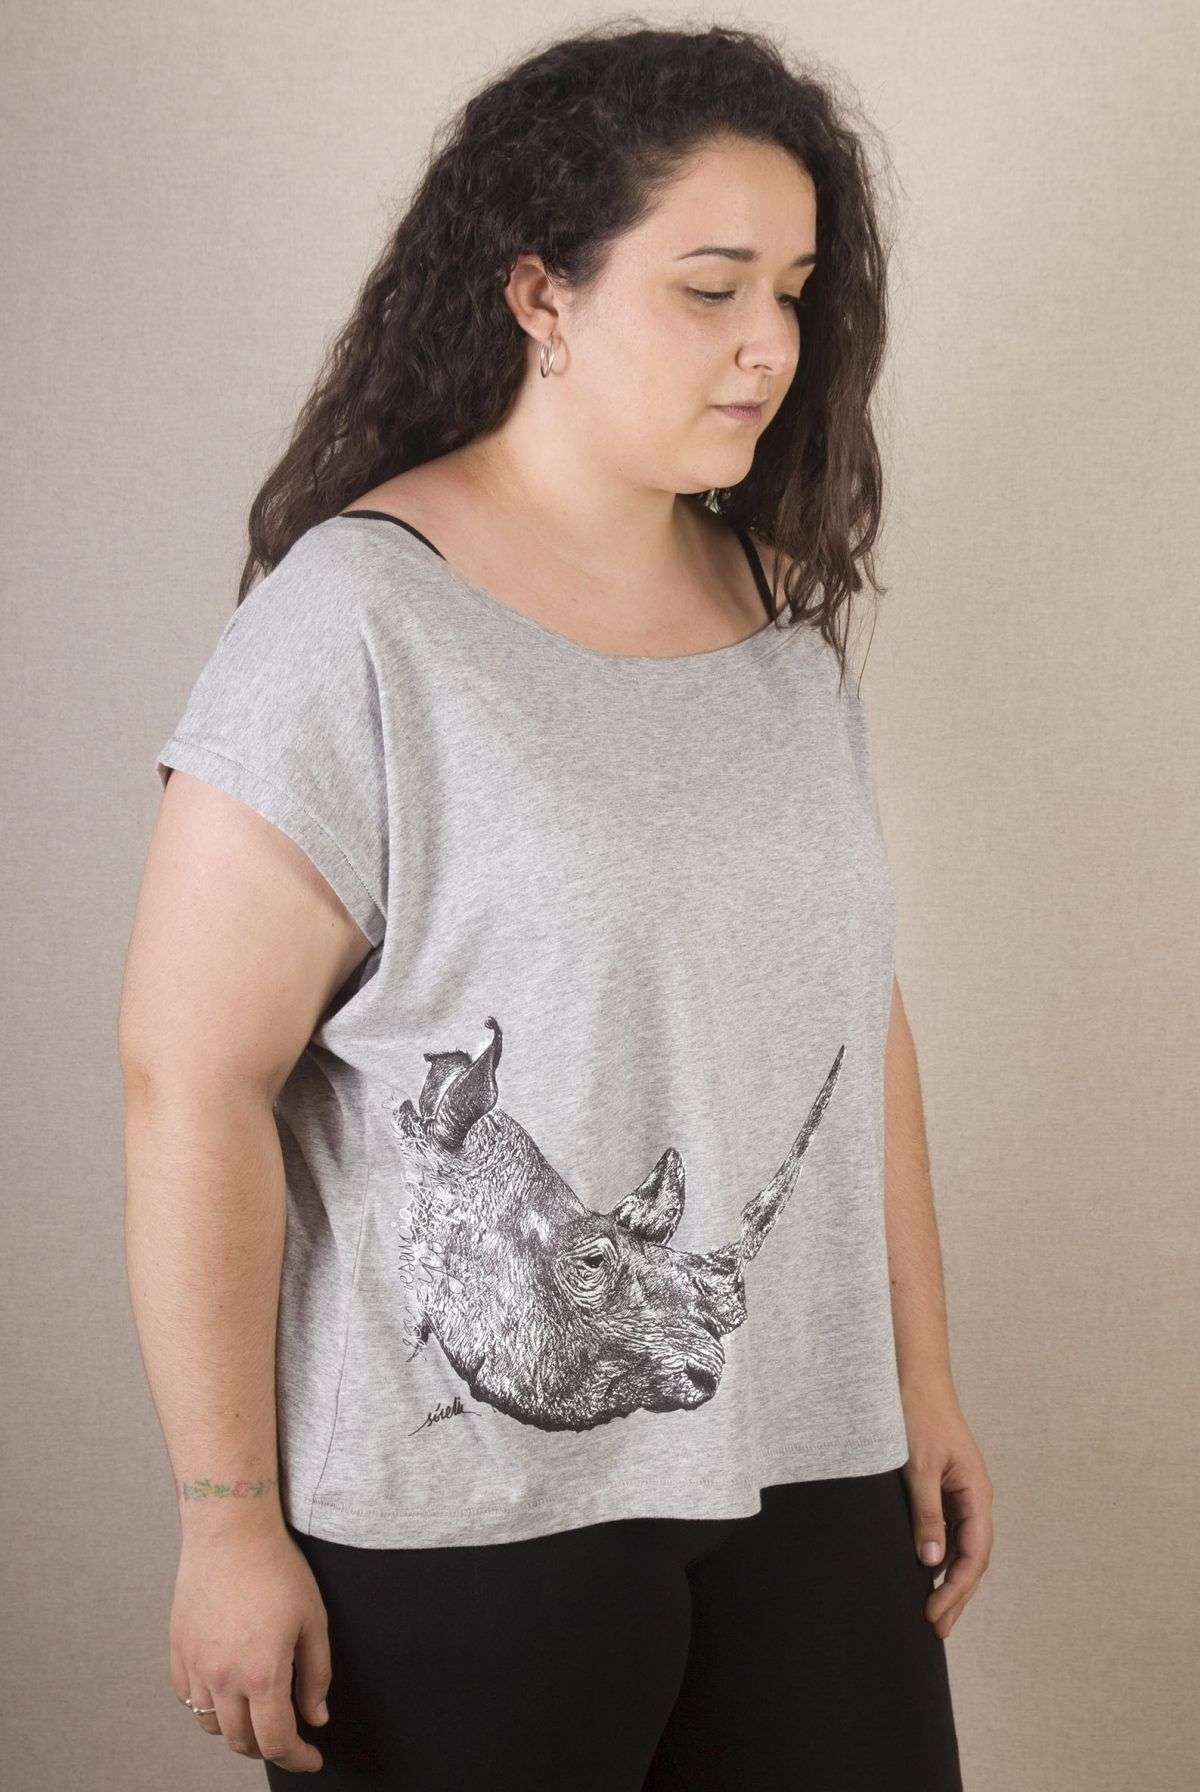 Camiseta rinoceronte mujer-sirem wild